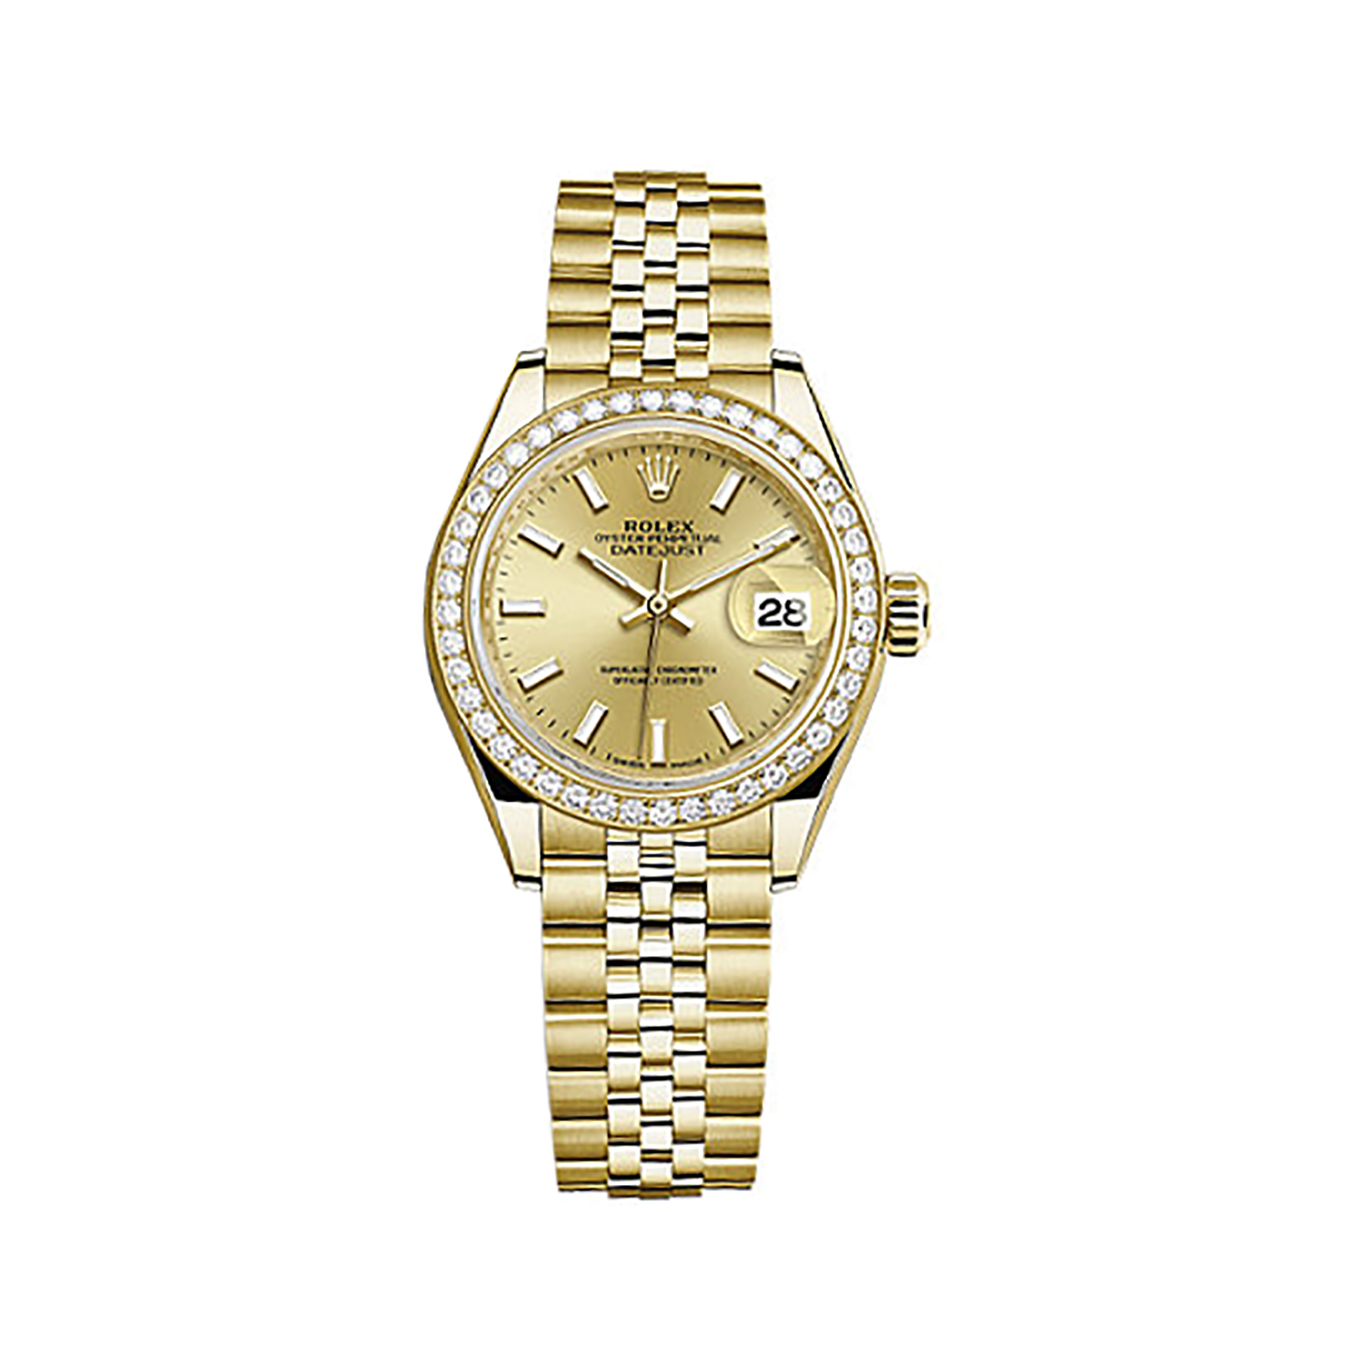 Lady-Datejust 28 279138RBR Gold & Diamonds Watch (Champagne)